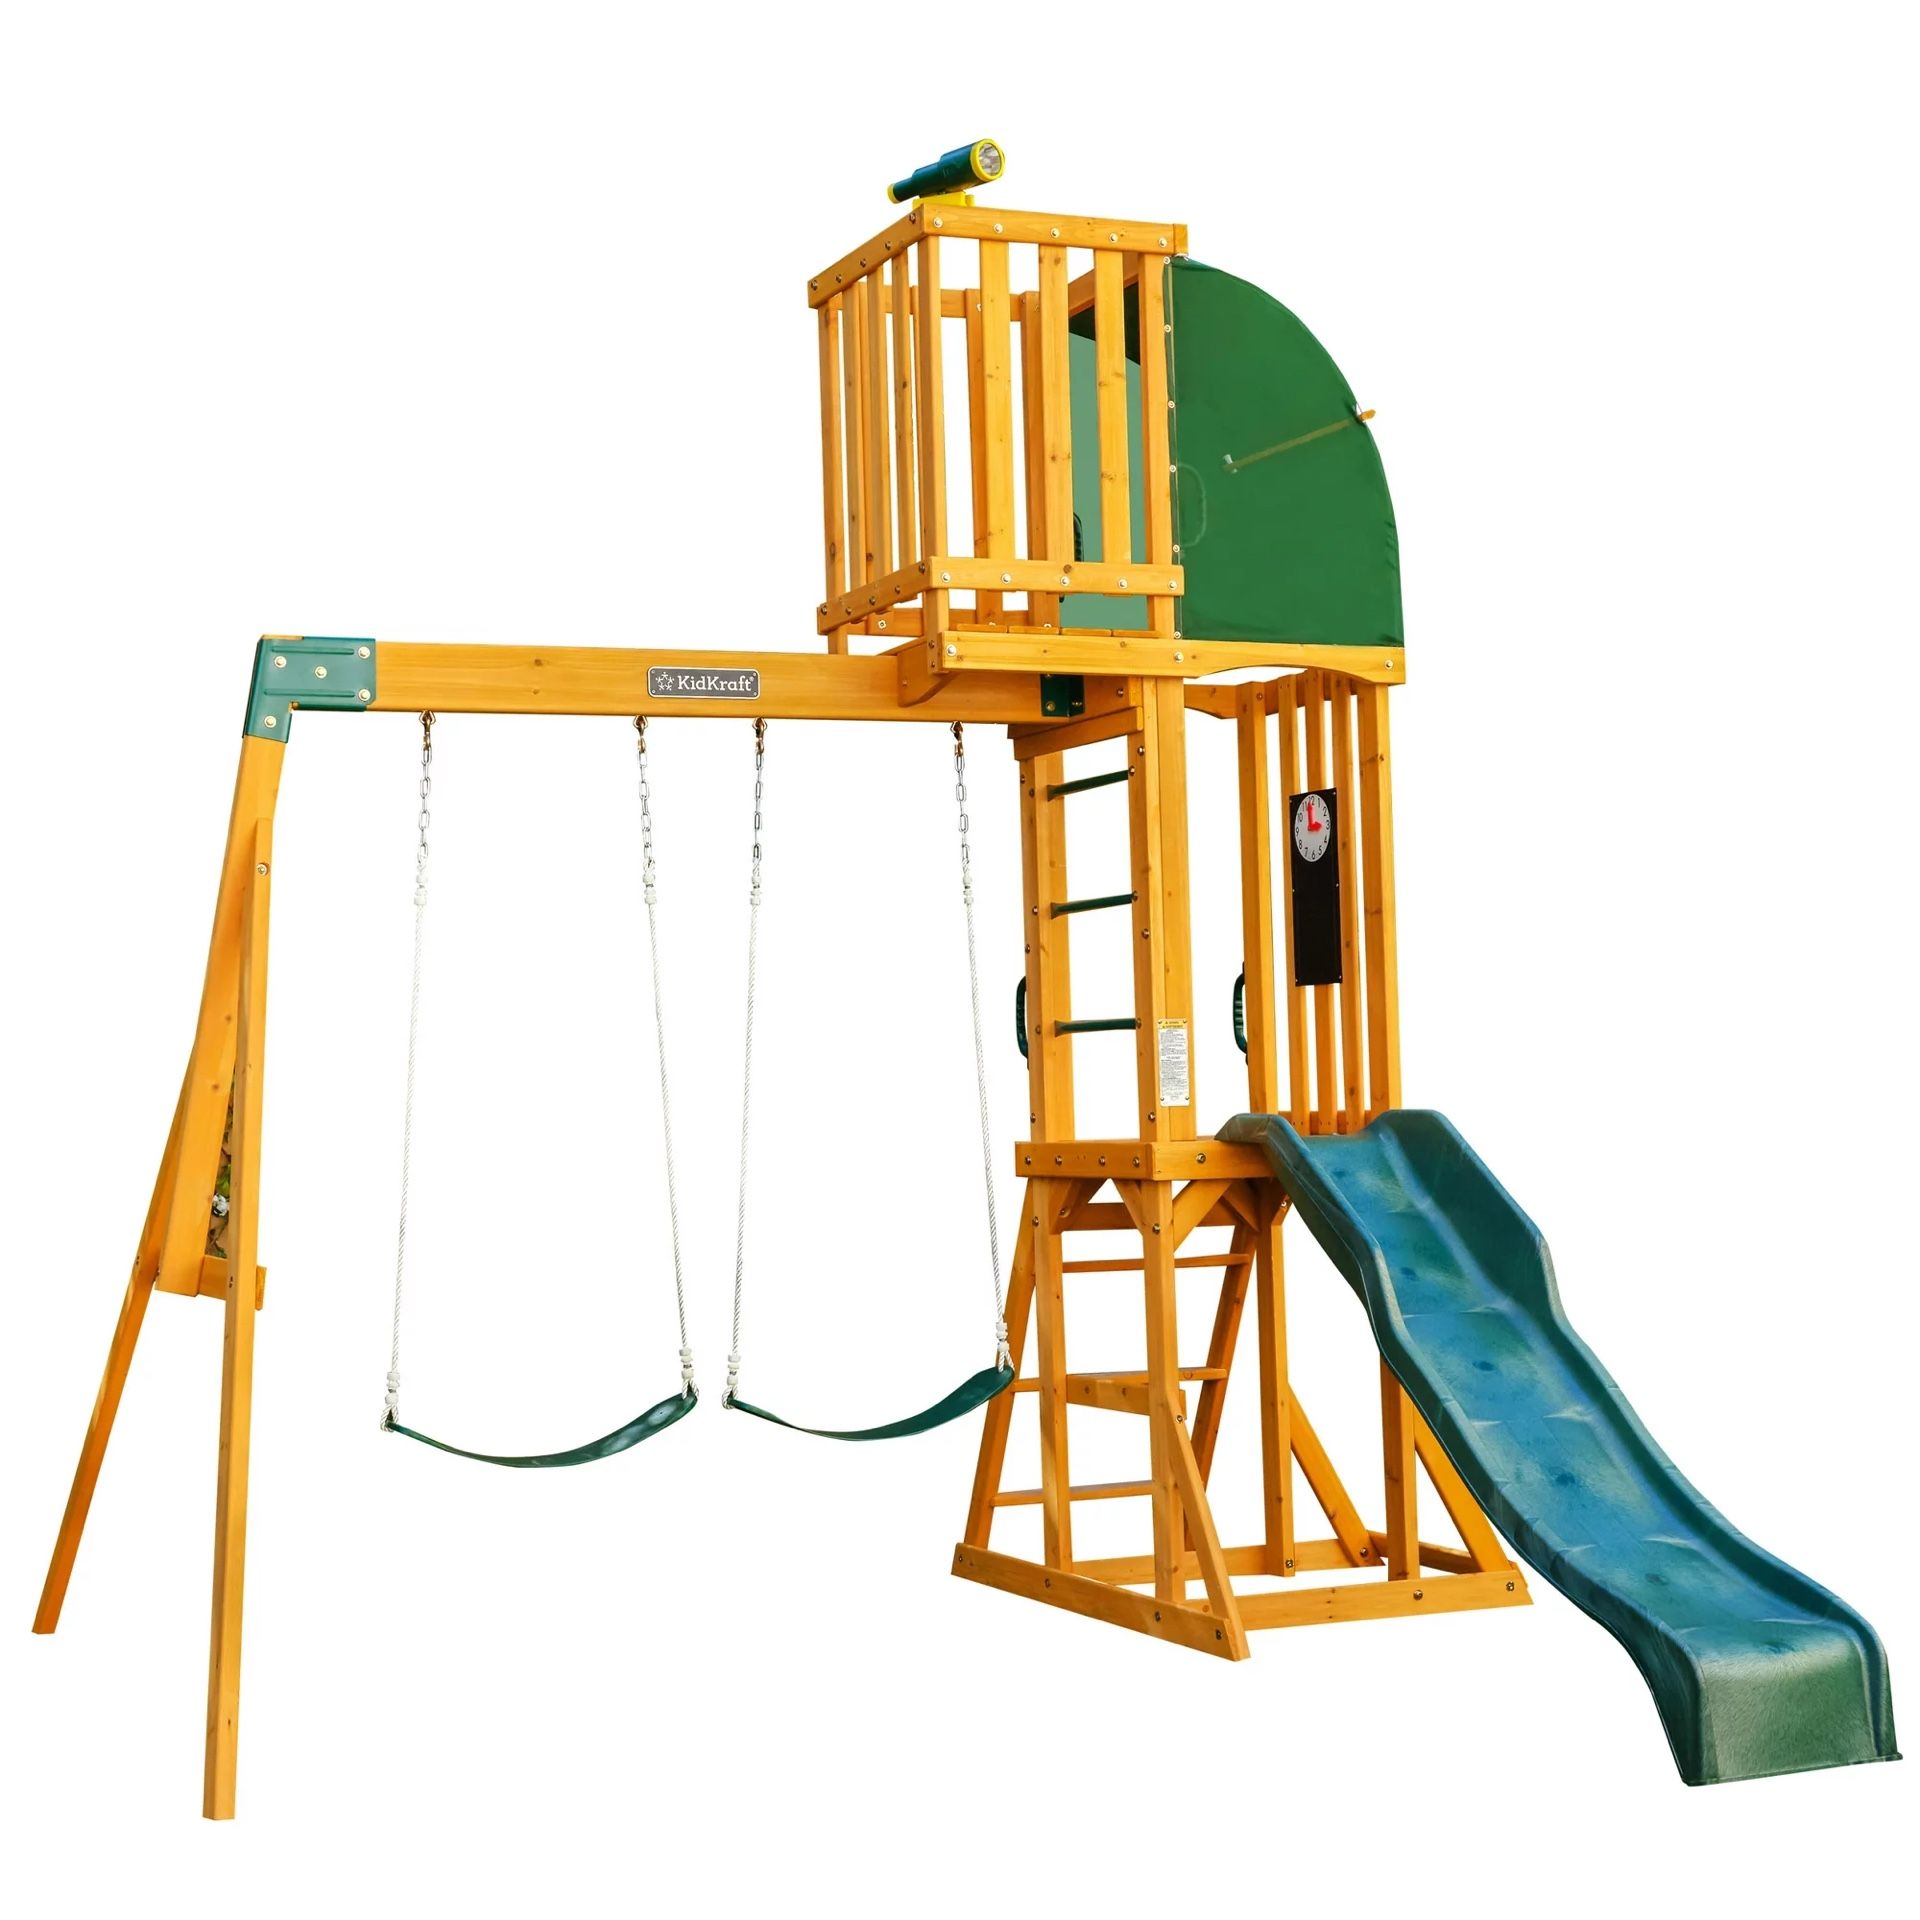 (NEW) KidKraft Hawk Tower Wooden Swing Set with Slide and 2 Belt Swings, 9.9 feet Tall